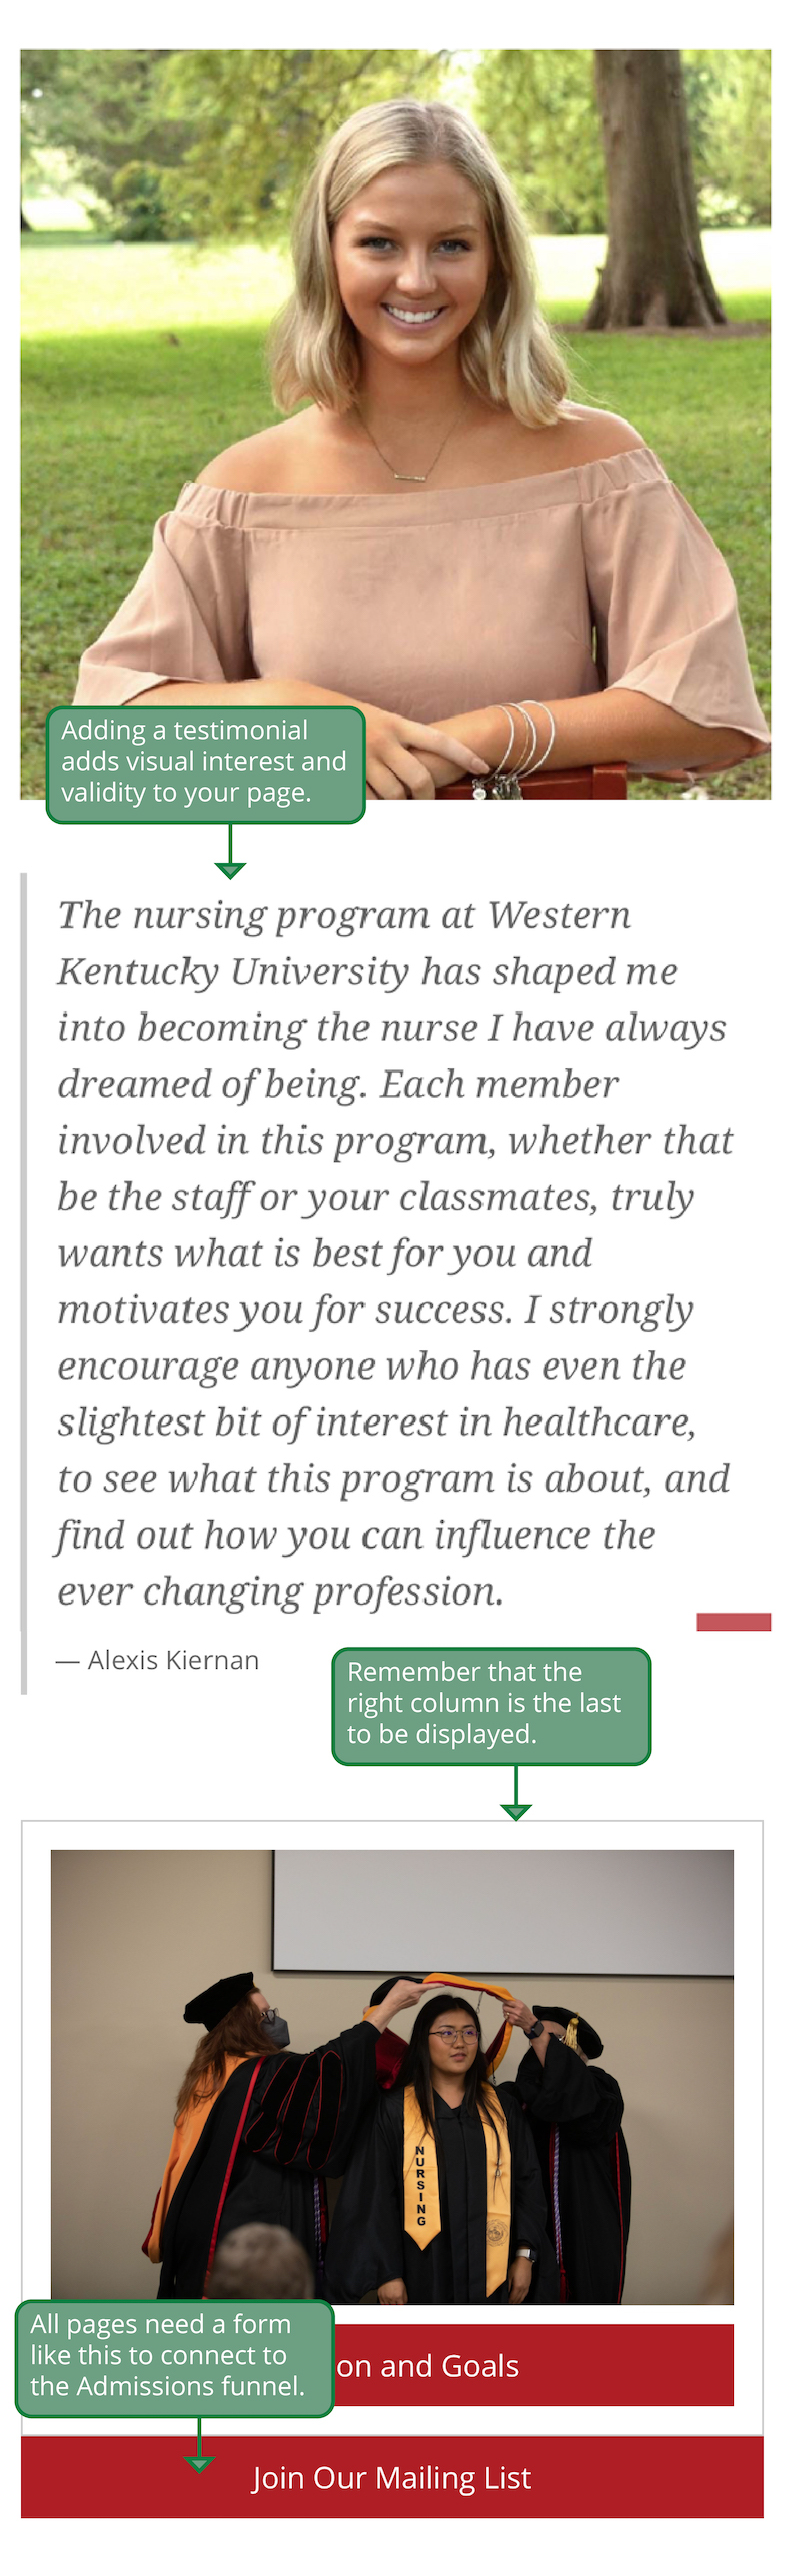 WKU Nursing home page after updates.